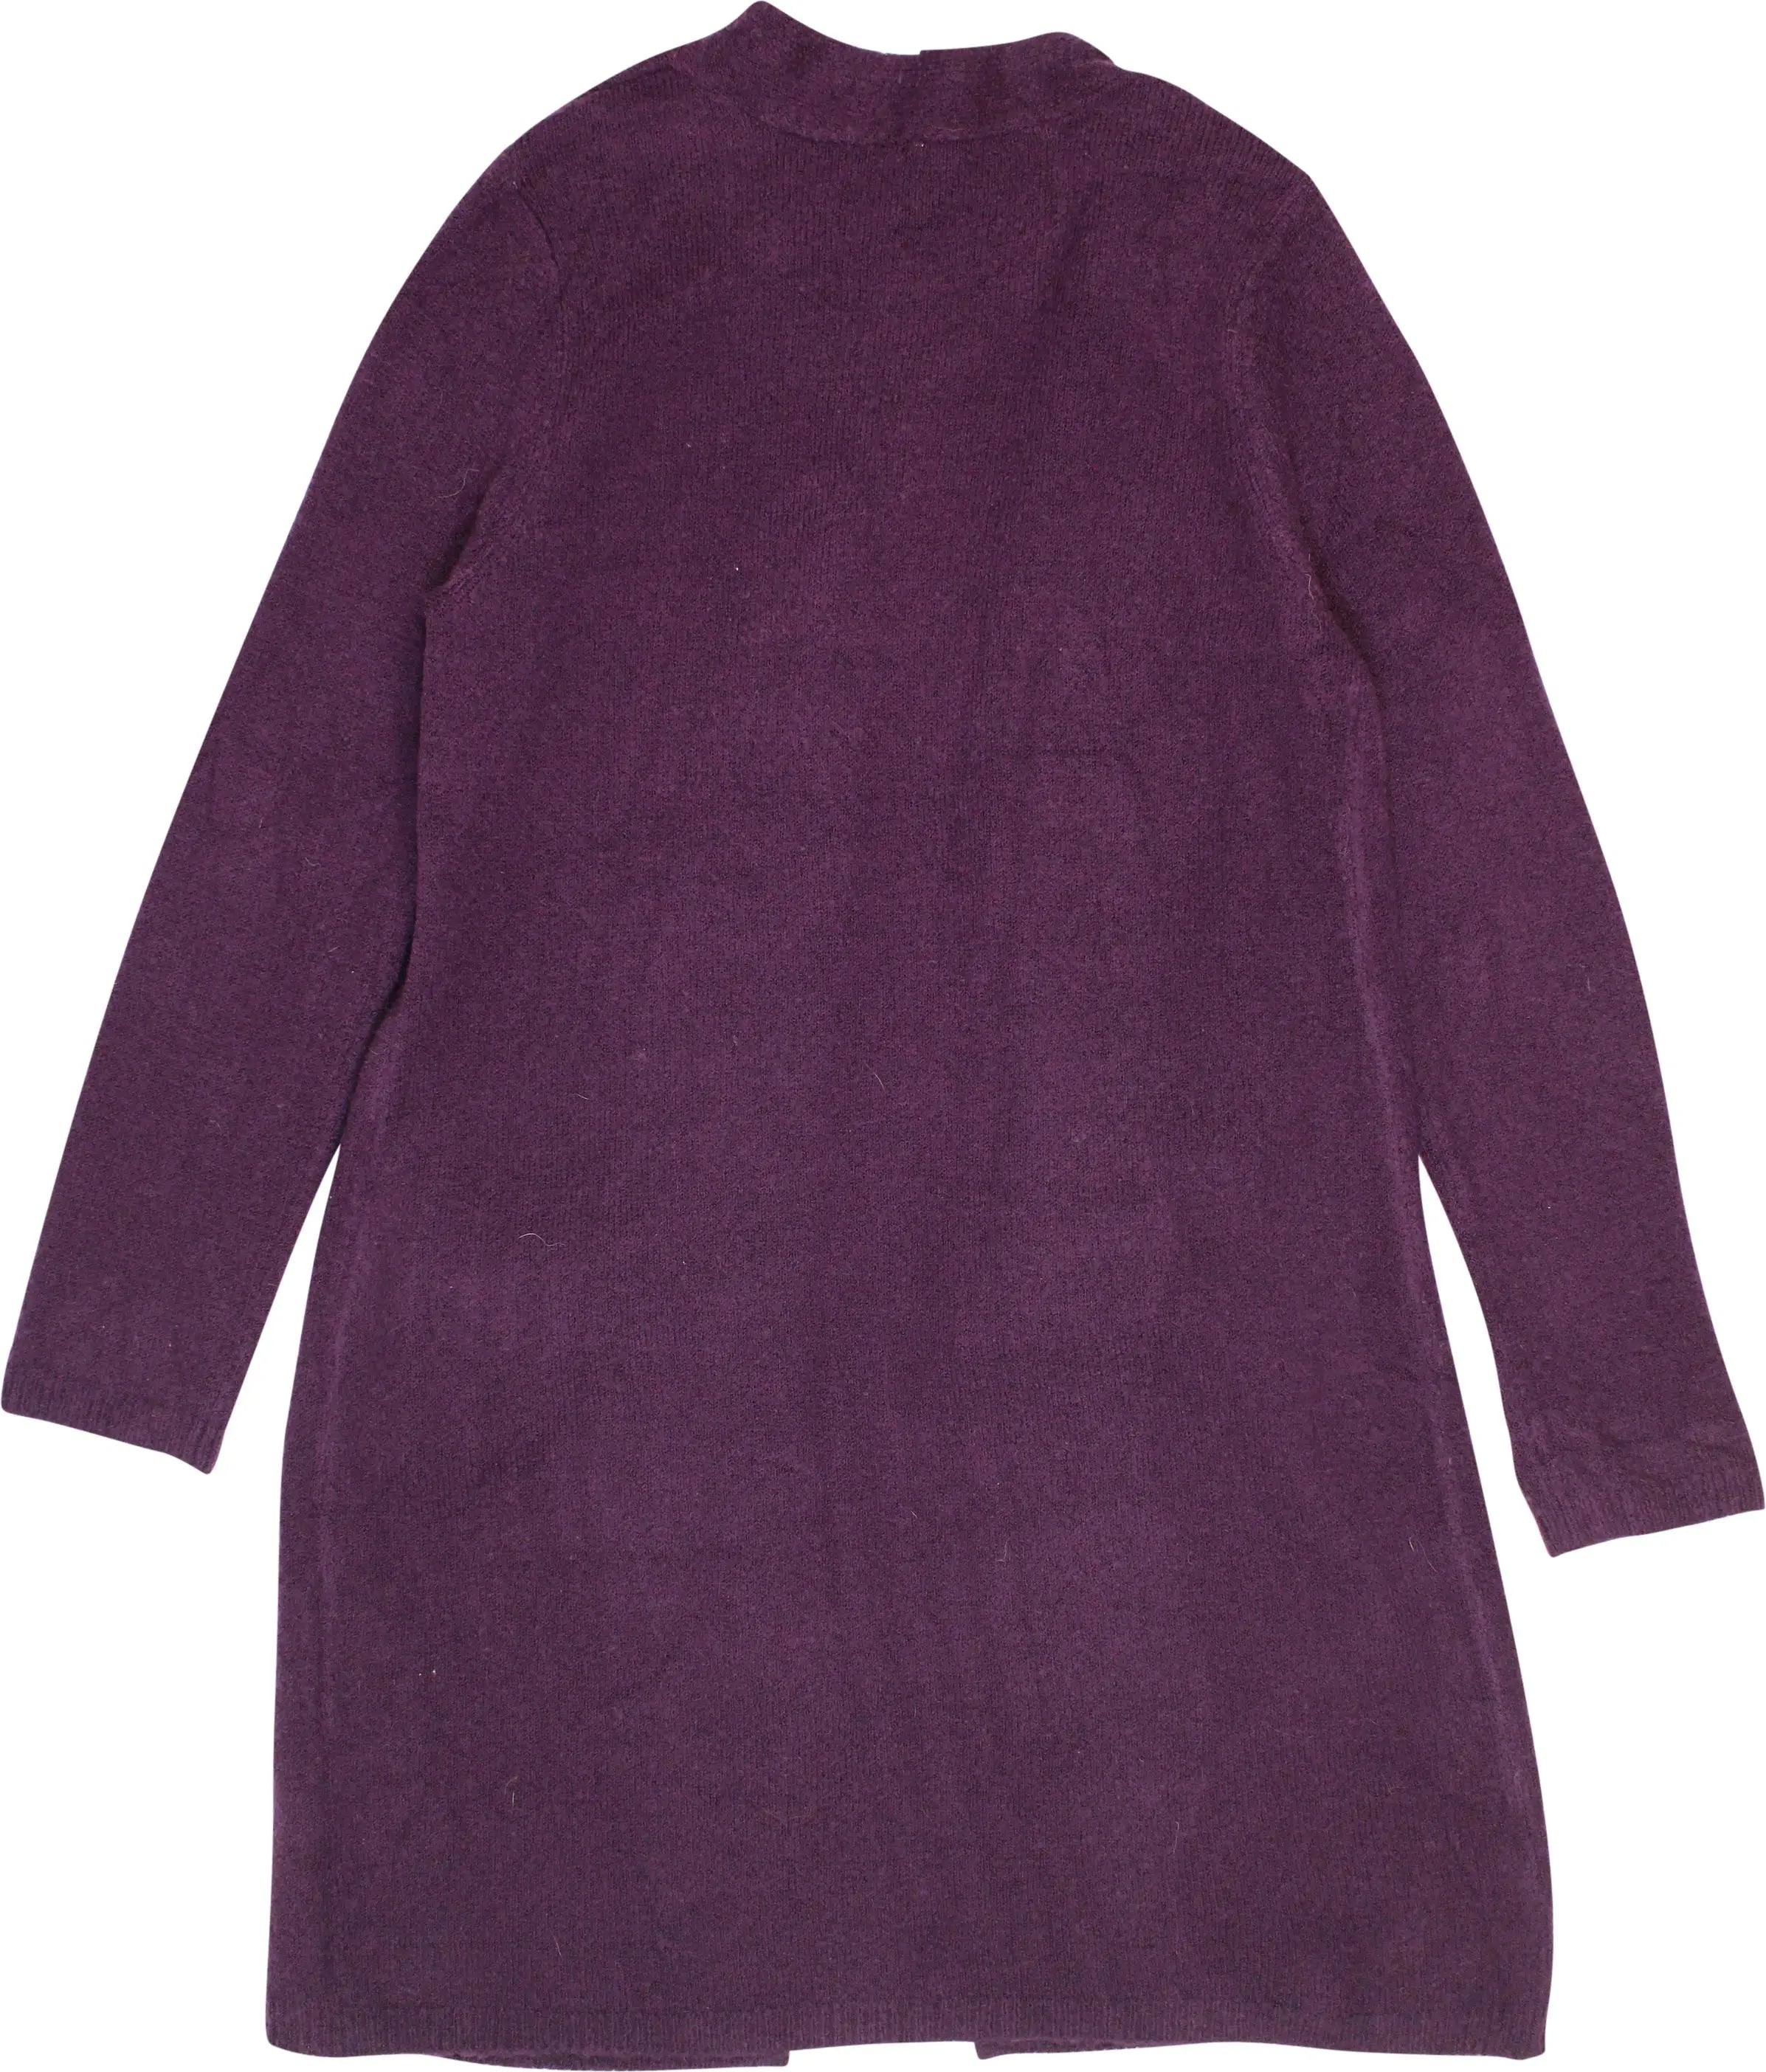 Miss Etam - Purple Long Cardigan- ThriftTale.com - Vintage and second handclothing